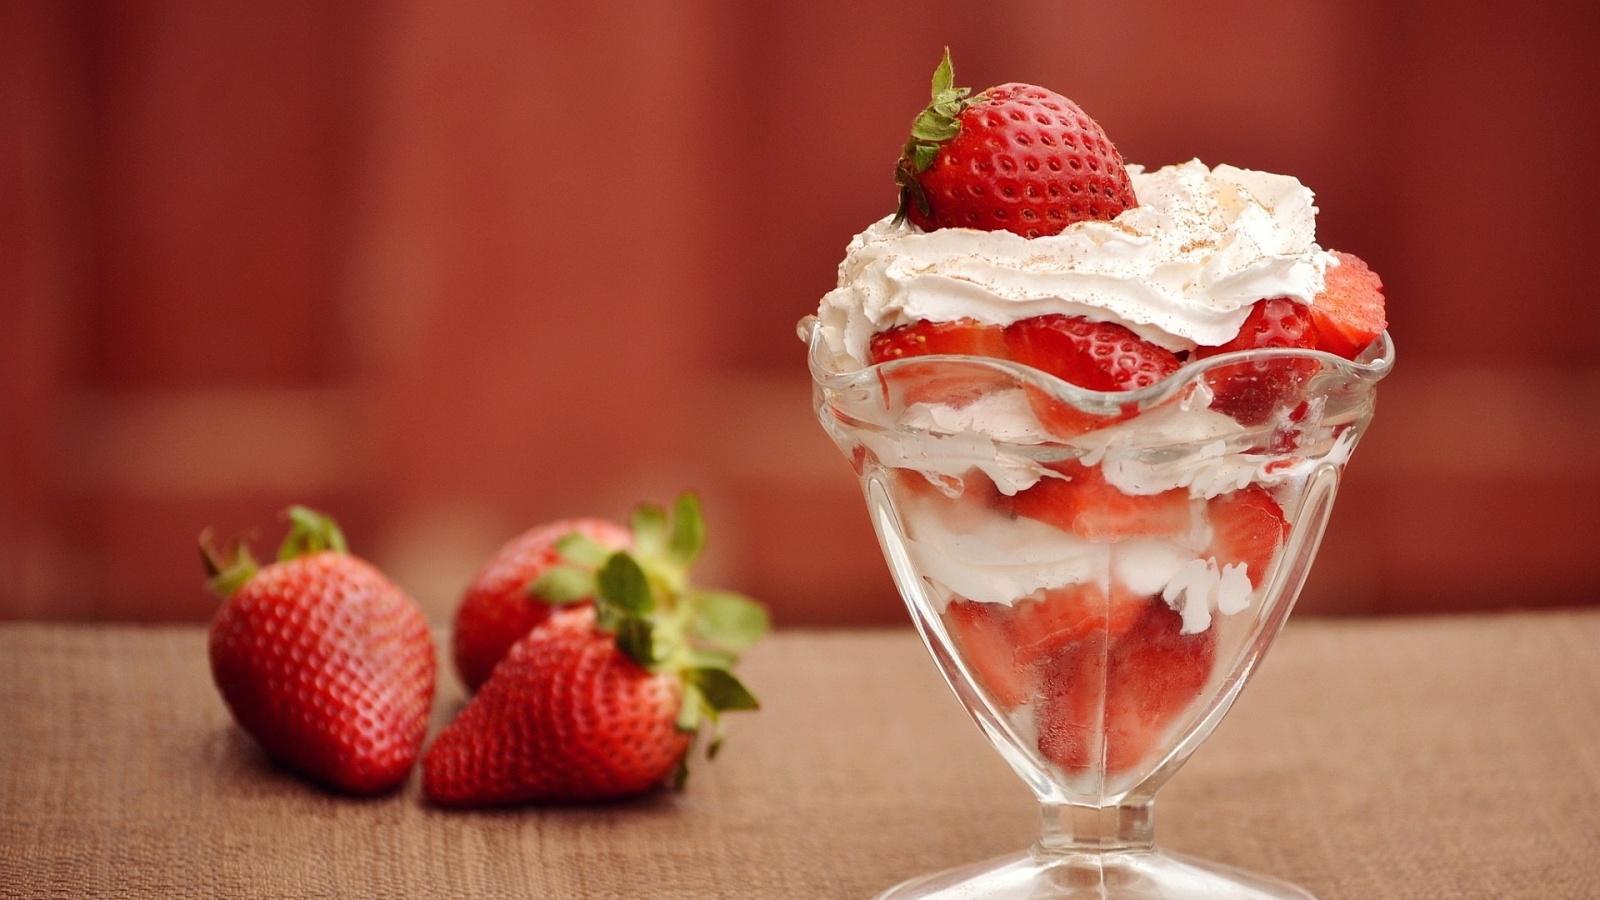 Cream strawberry dessert Wallpaper in 1600x900 HD Resolutions